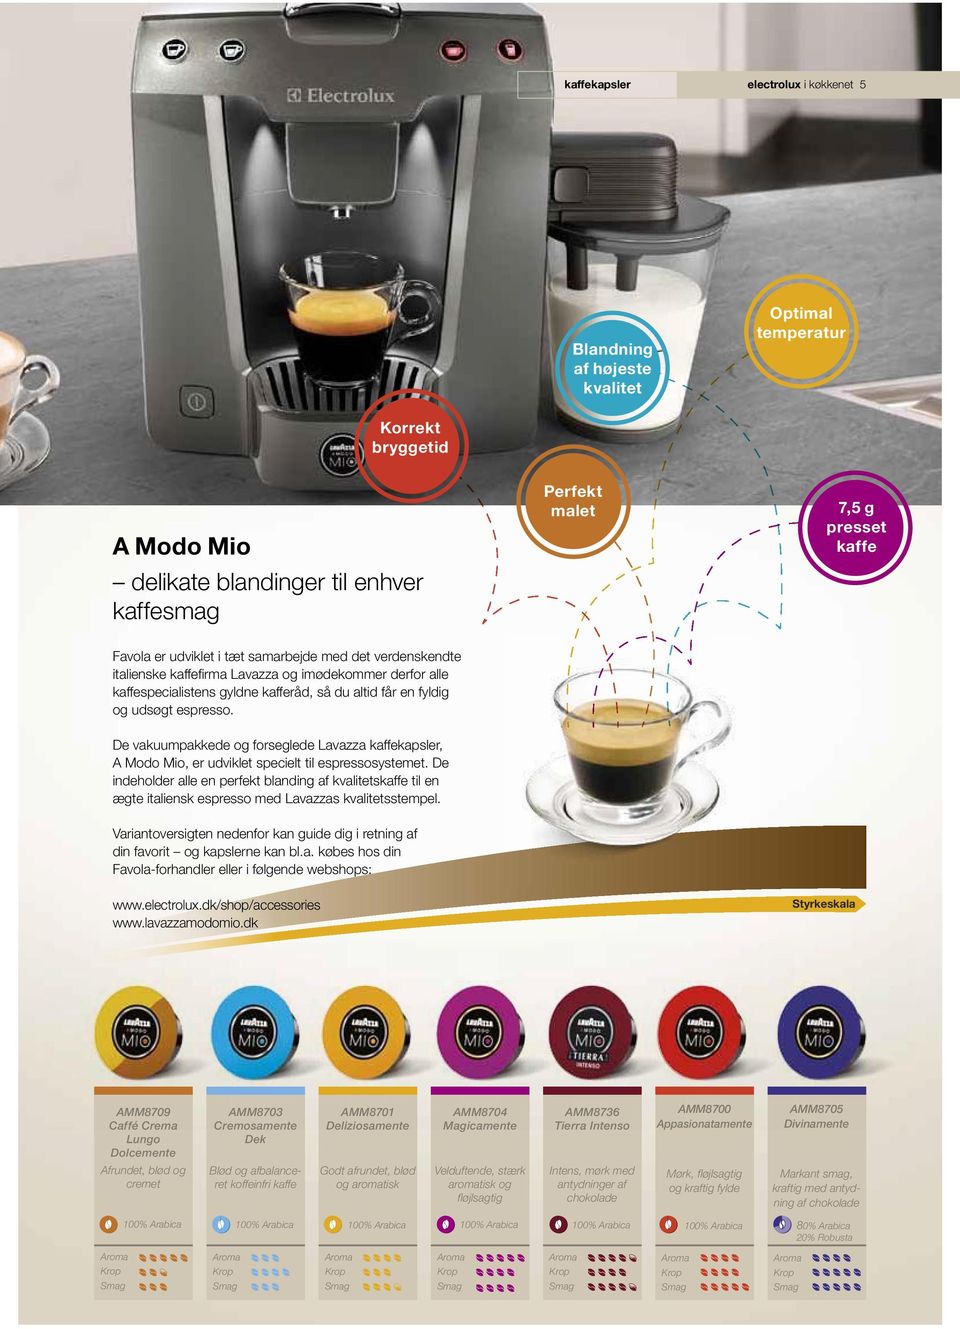 De vakuumpakkede og forseglede Lavazza kaffekapsler, A Modo Mio, er udviklet specielt til espressosystemet.